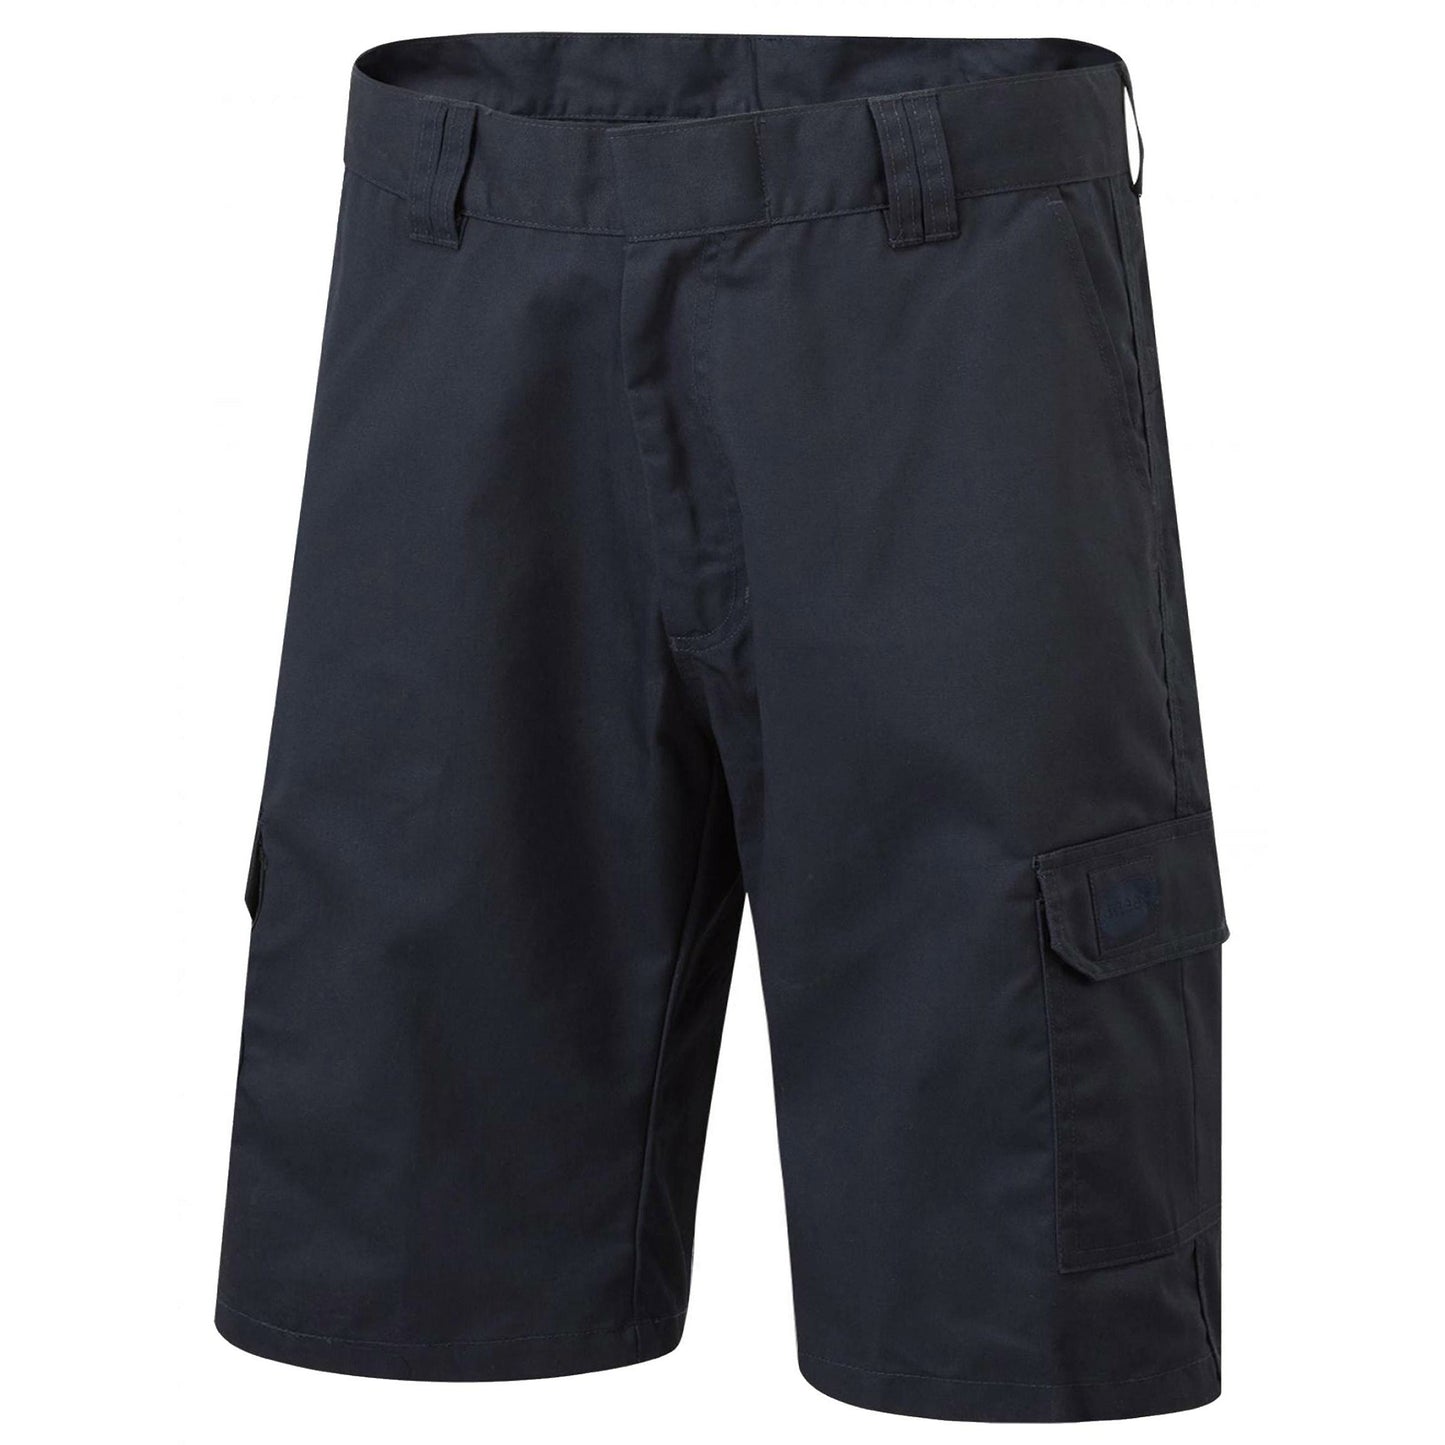 Mens cargo shorts - navy